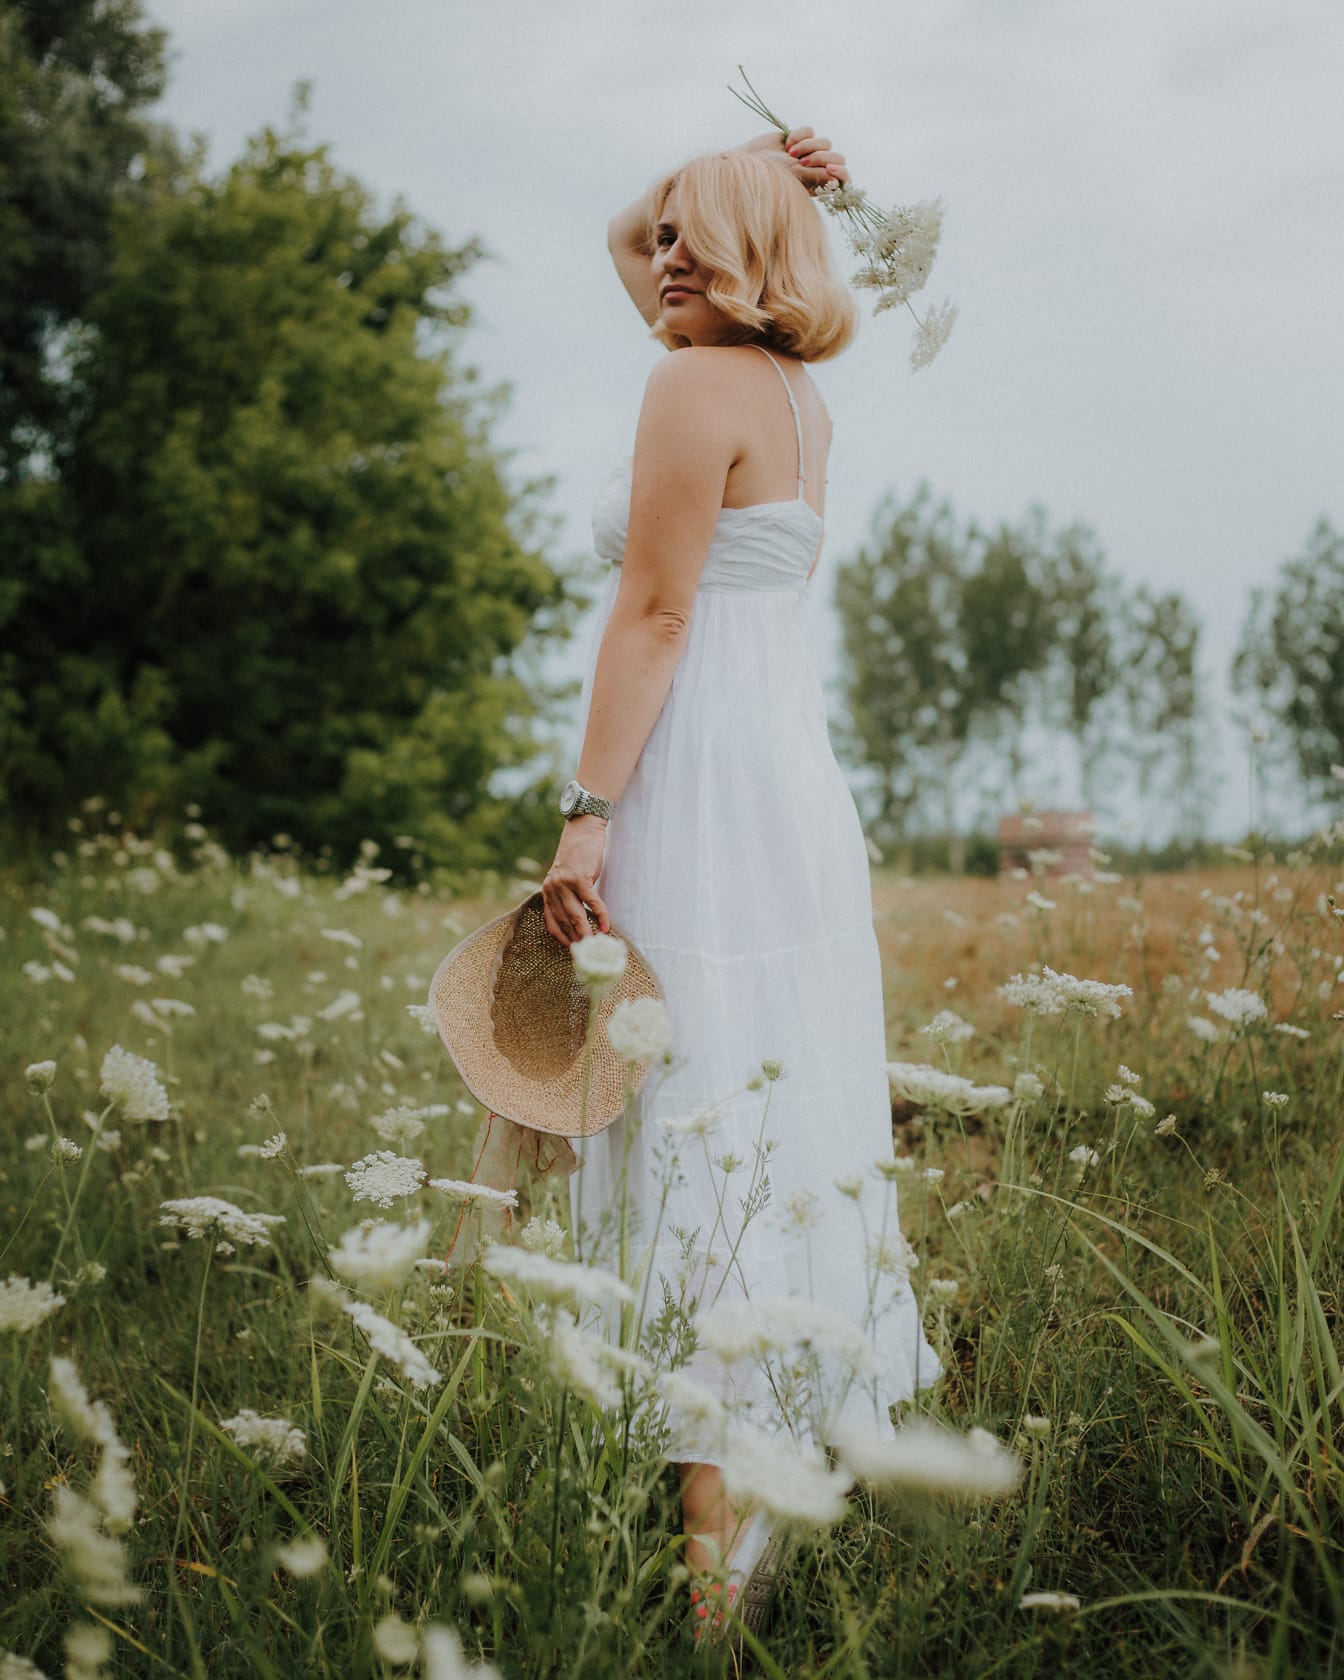 Belle blonde debout en robe blanche dans la prairie